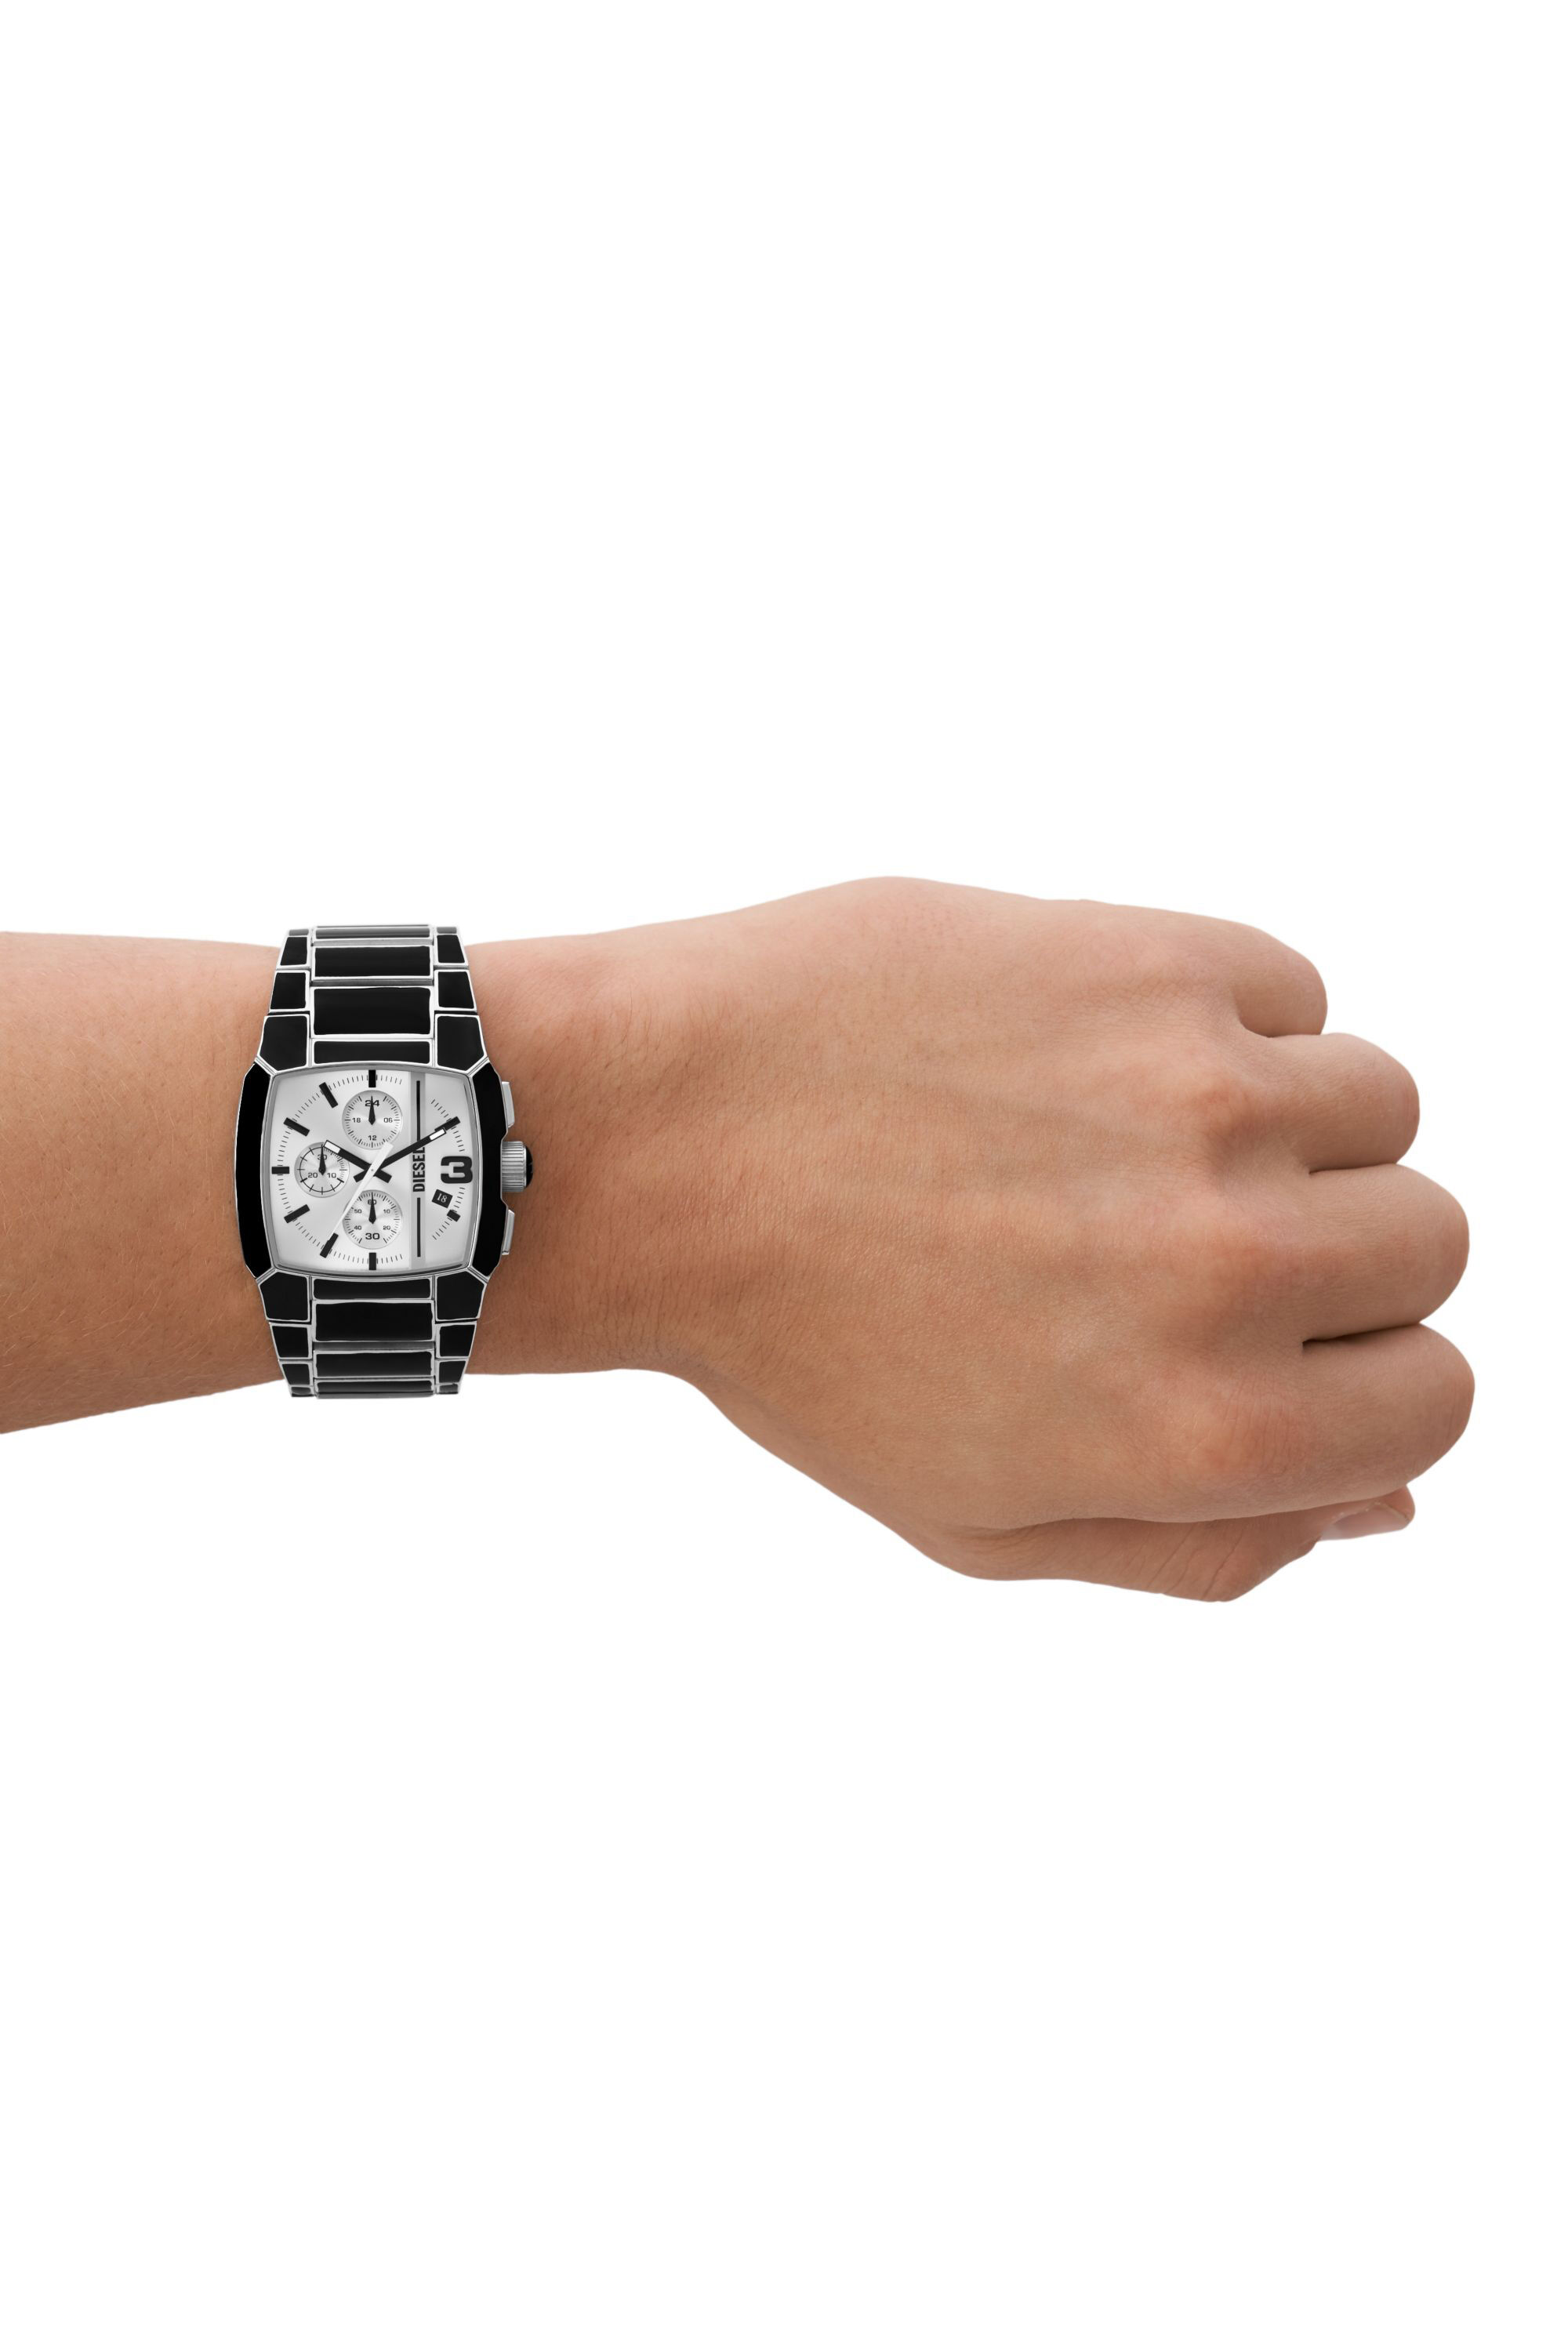 Men's Cliffhanger black enamel and stainless steel watch | DZ4646 Diesel